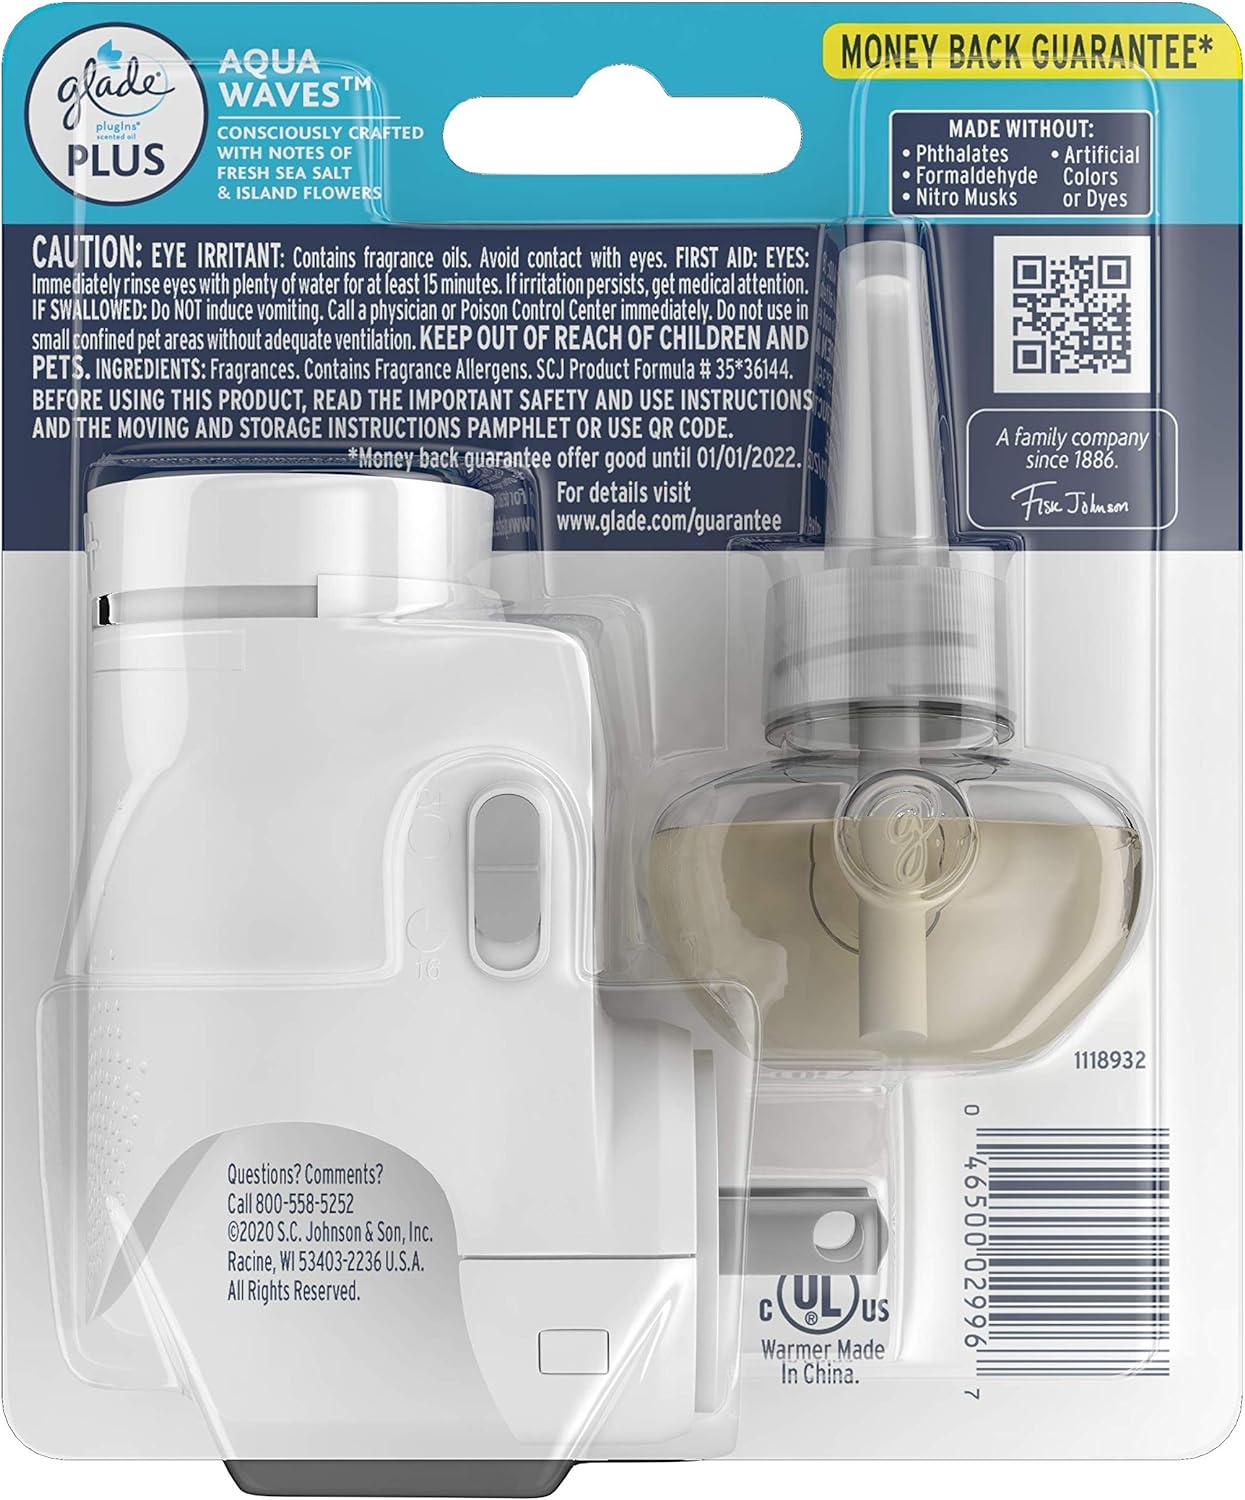 Glade PlugIn Plus Air Freshener Starter Kit, Scented Oil for Home and Bathroom, Aqua Waves, 0.67 Fl Oz, 1 Warmer + 1 Refill